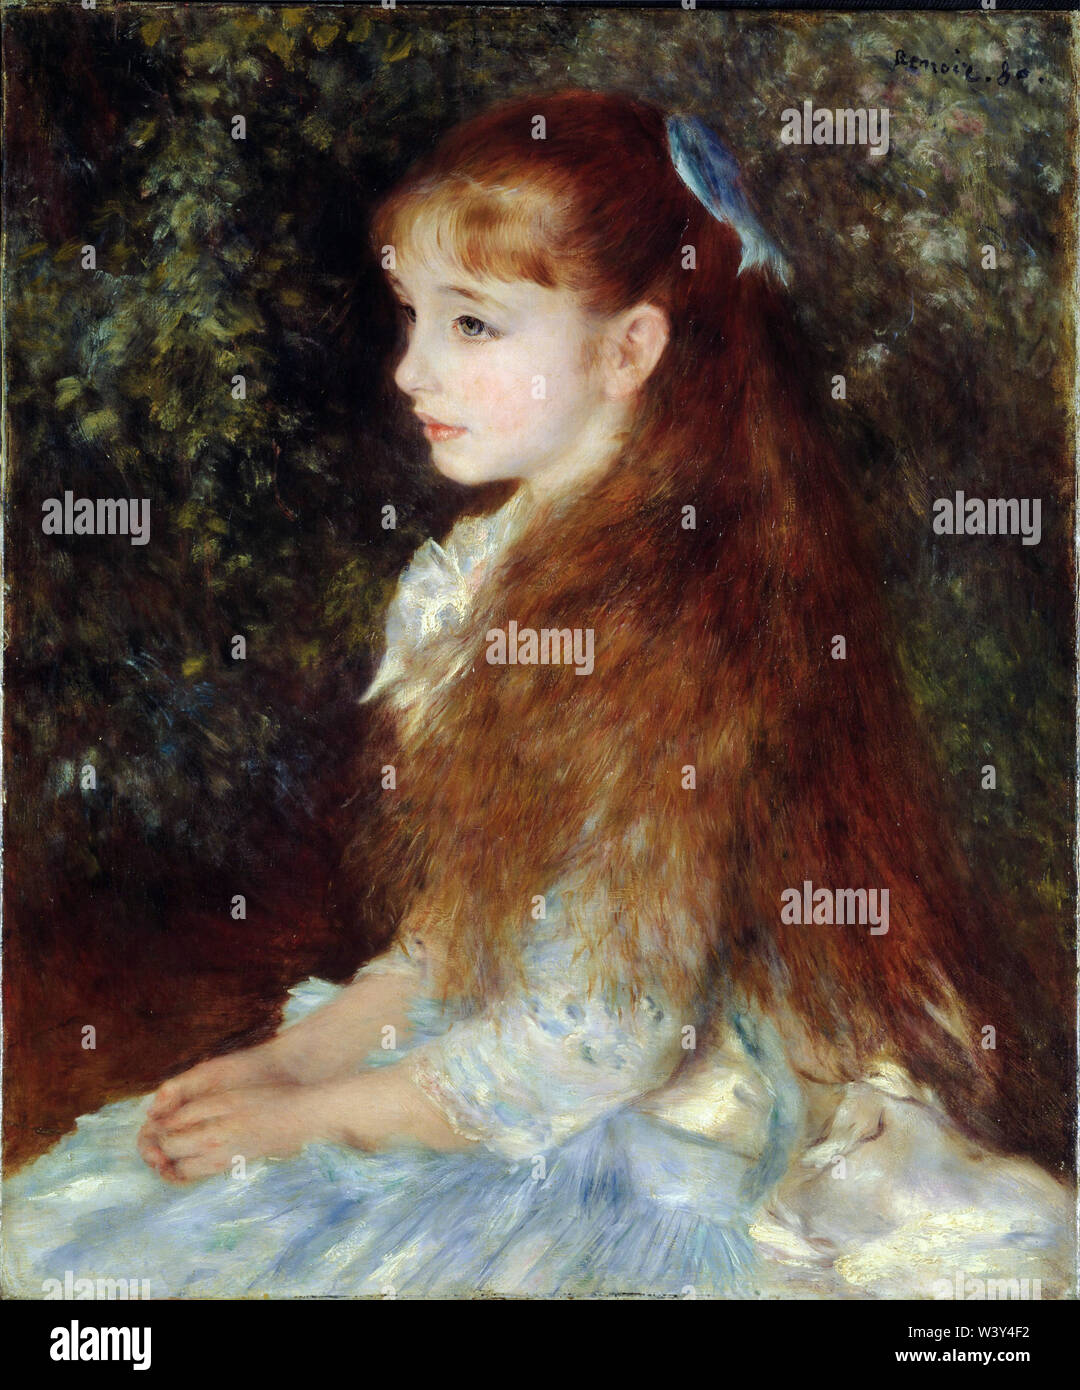 Pierre-Auguste Renoir, Mademoiselle Irène Cahen d'Anvers, (Little Irene), portrait, Impressionist painting, 1880 Stock Photo